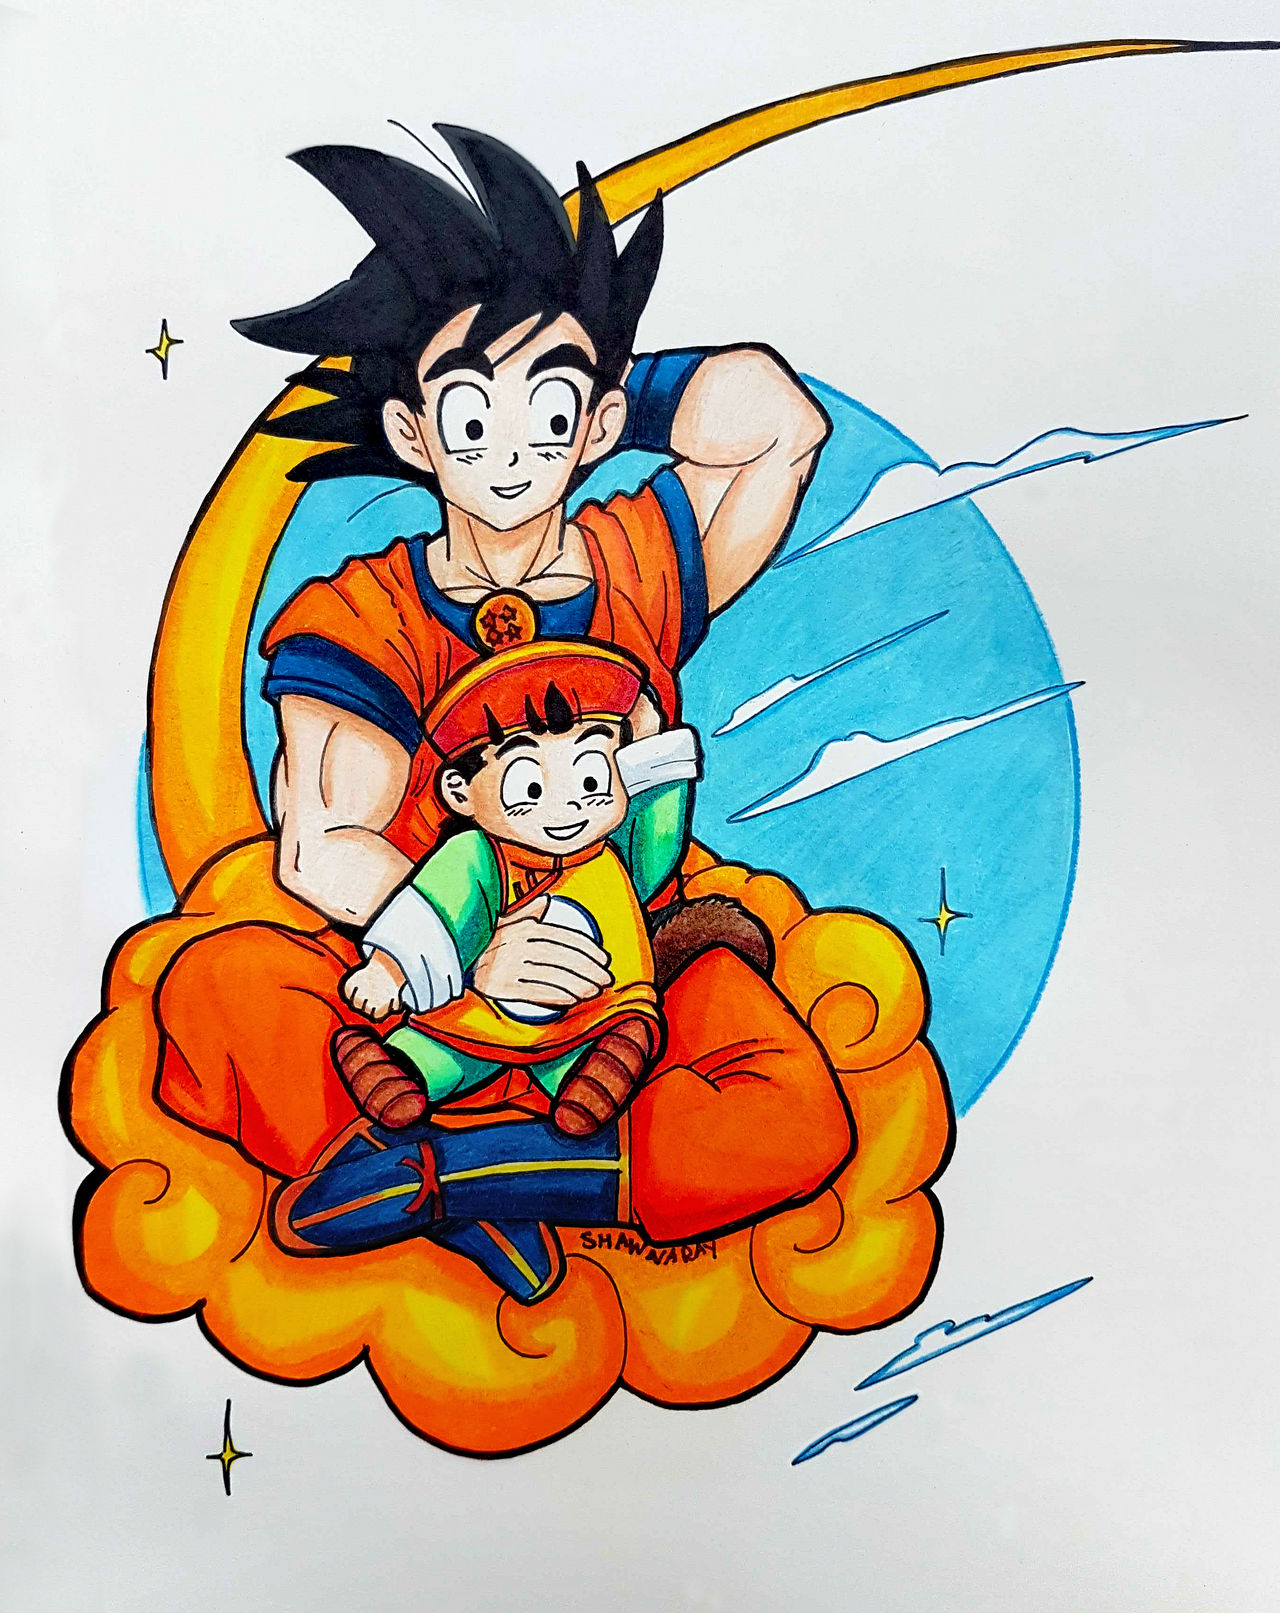 Dragon Ball Z Goku and Baby Gohan by Dyewind on DeviantArt